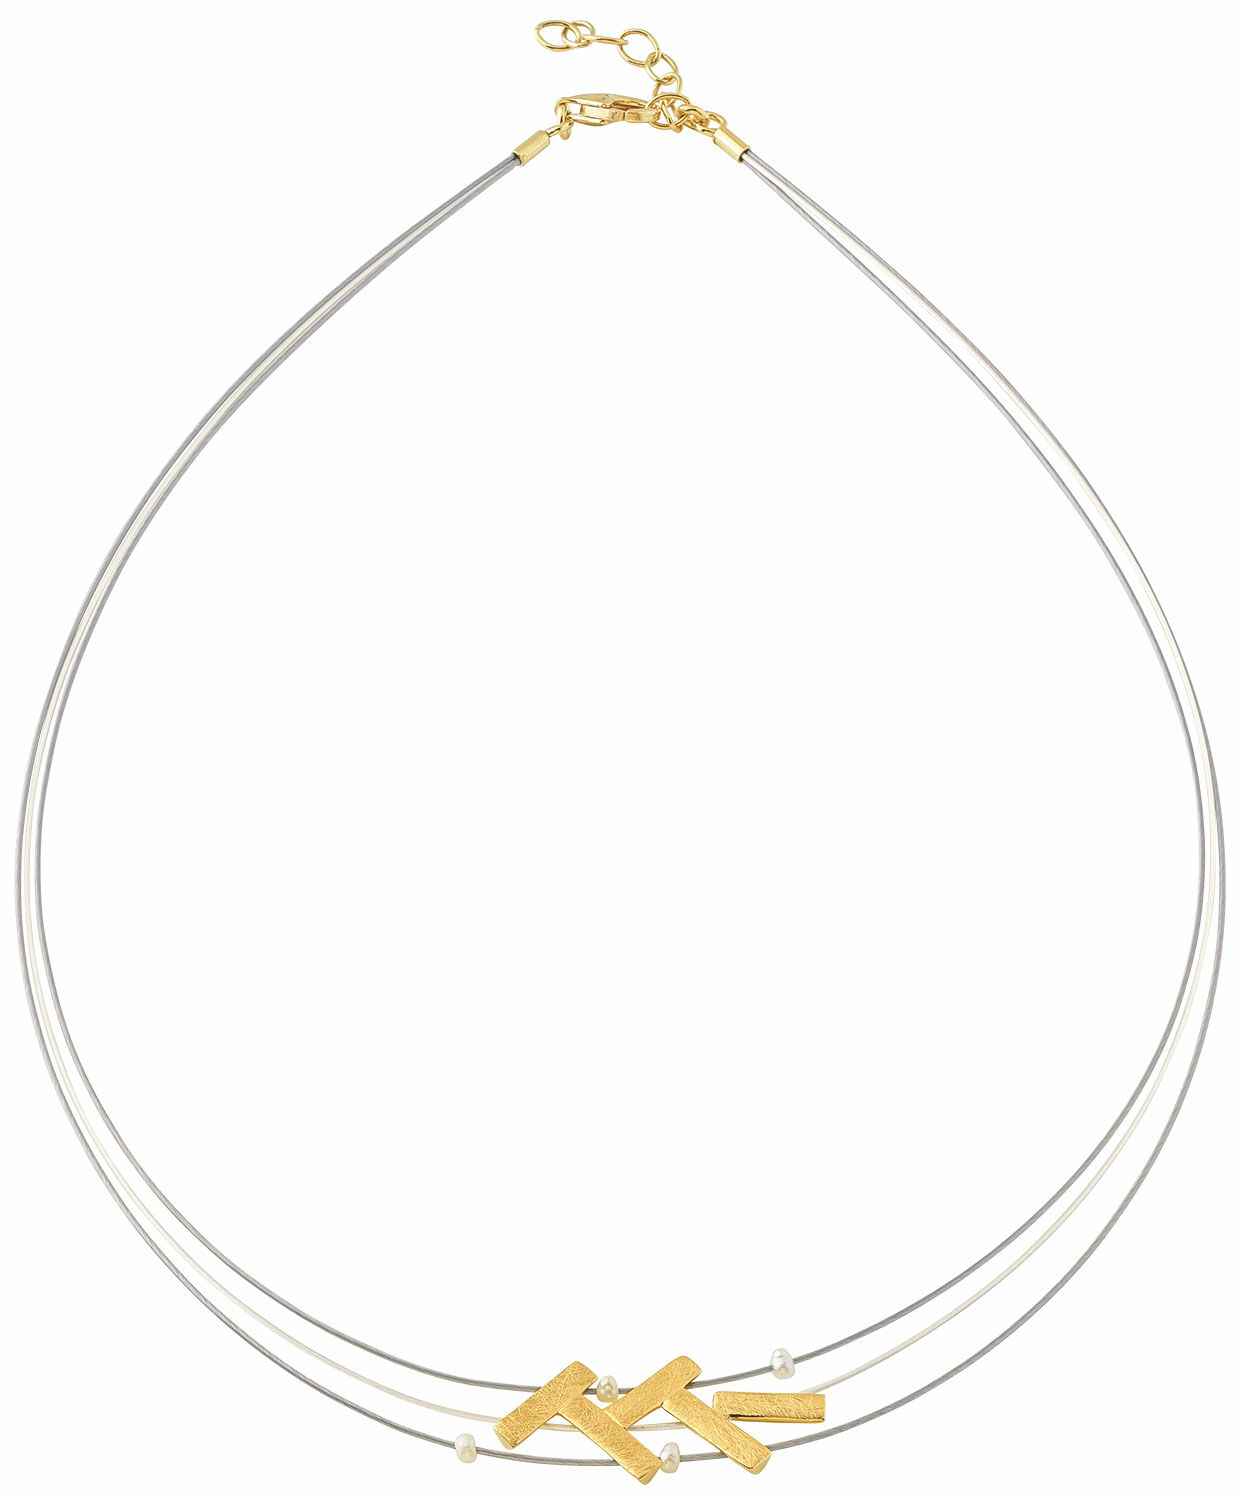 Necklace "Cassiopeia"